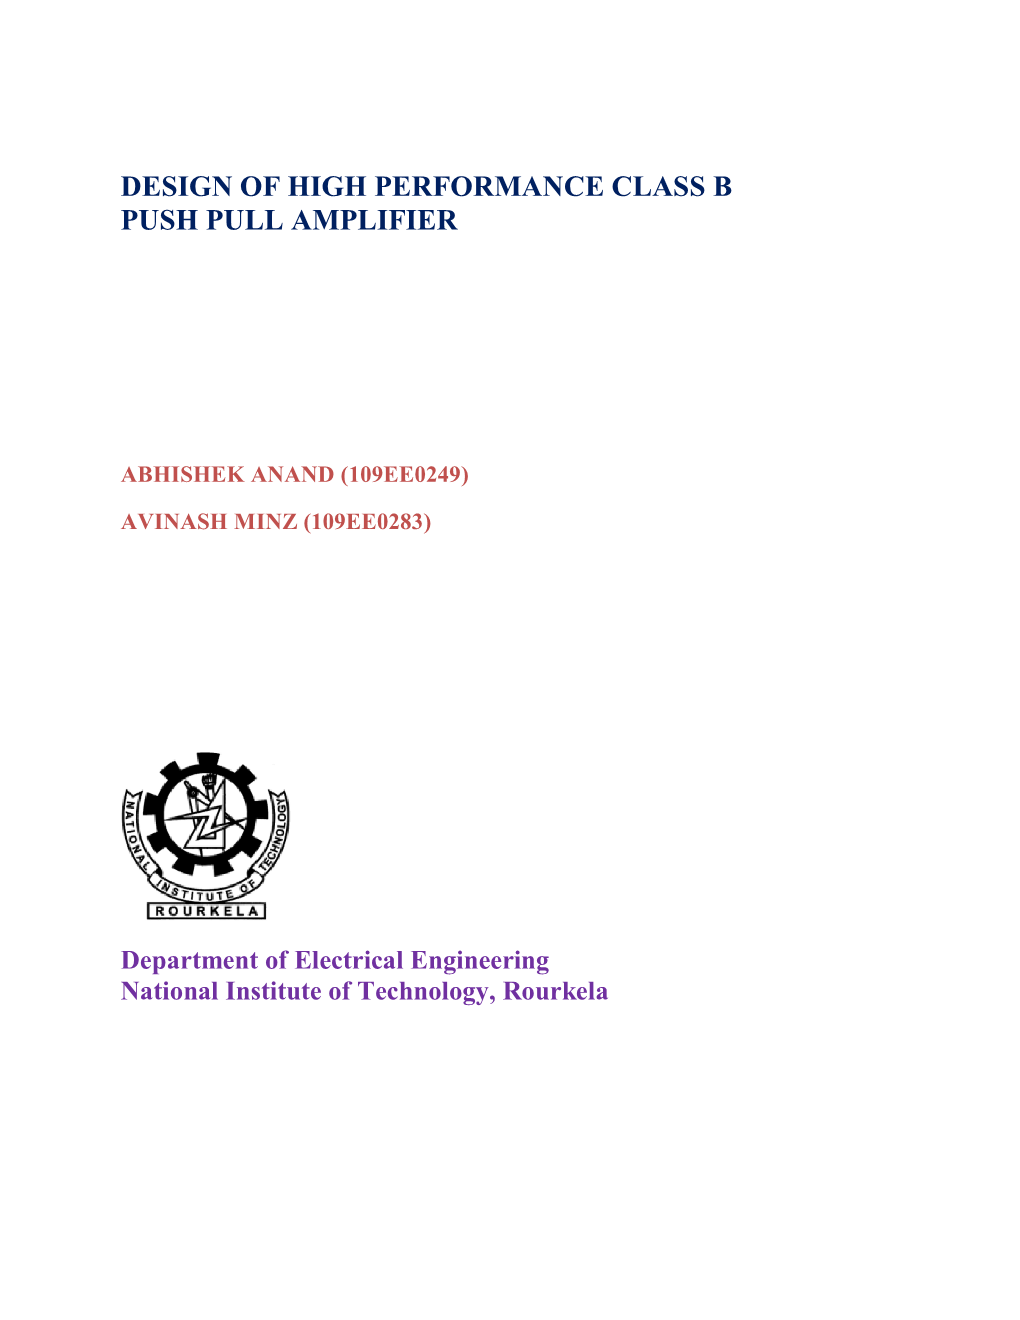 Design of High Performance Class B Push Pull Amplifier